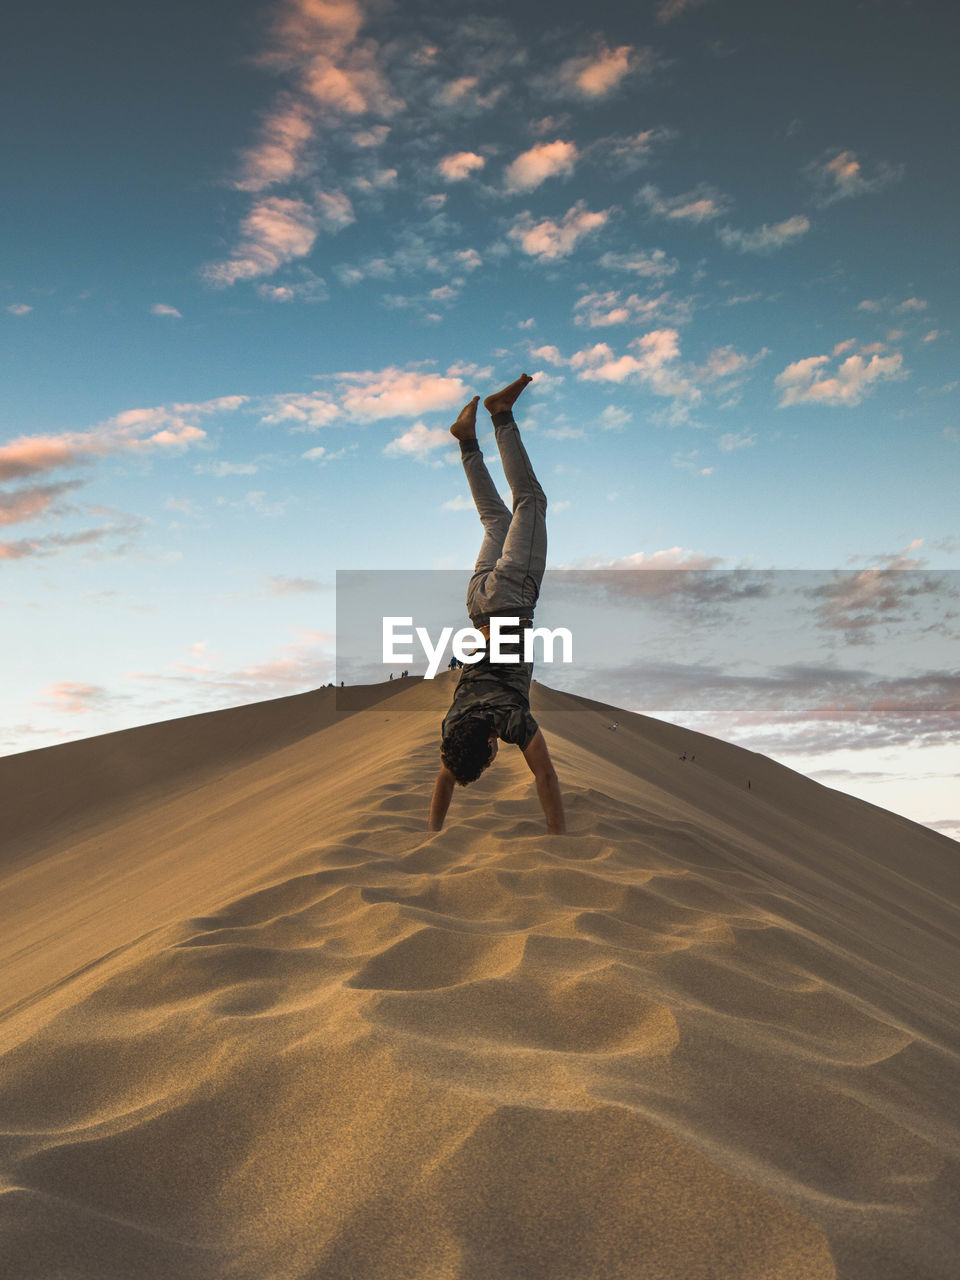 Man doing handstand in sand at dessert against sky